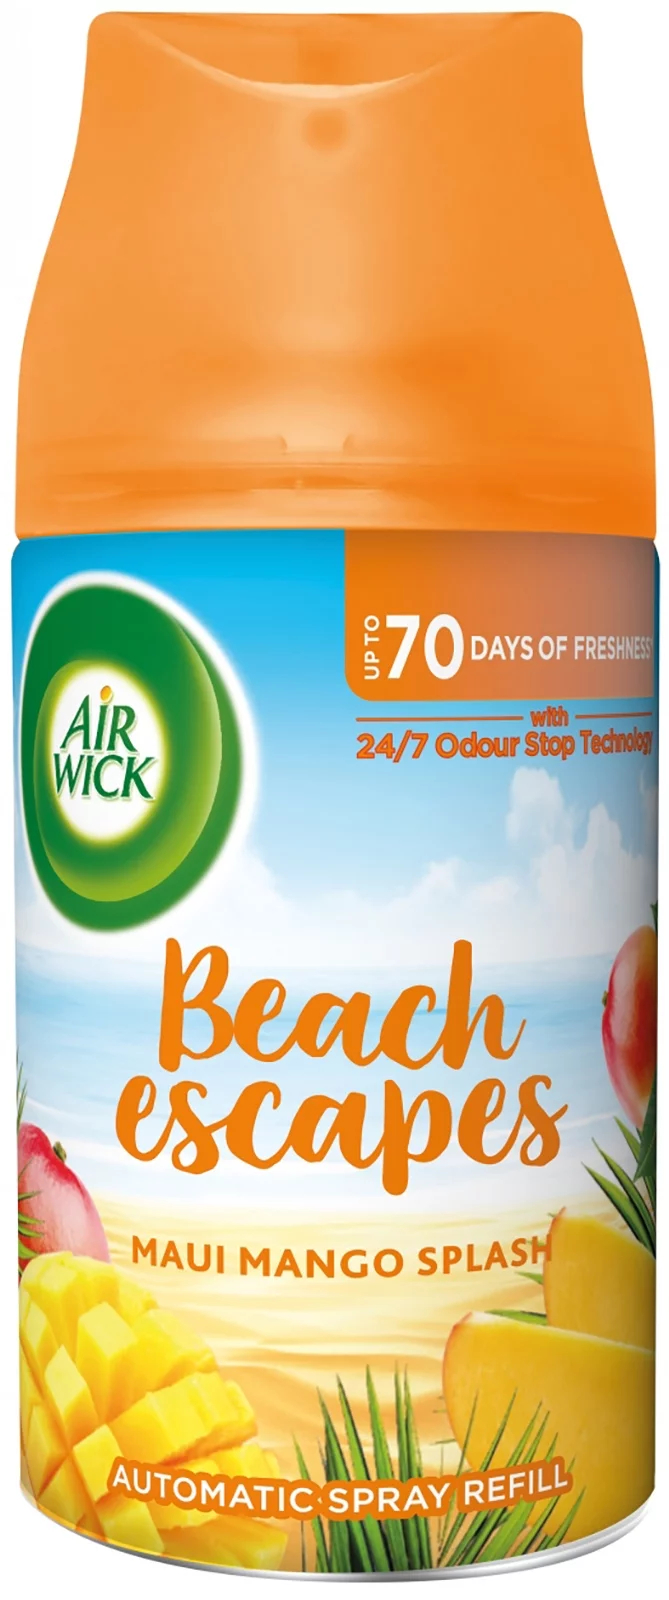 Ricarica per deodorante per ambienti - Freshmatic - Maui mango - 250 ml - Air Wick